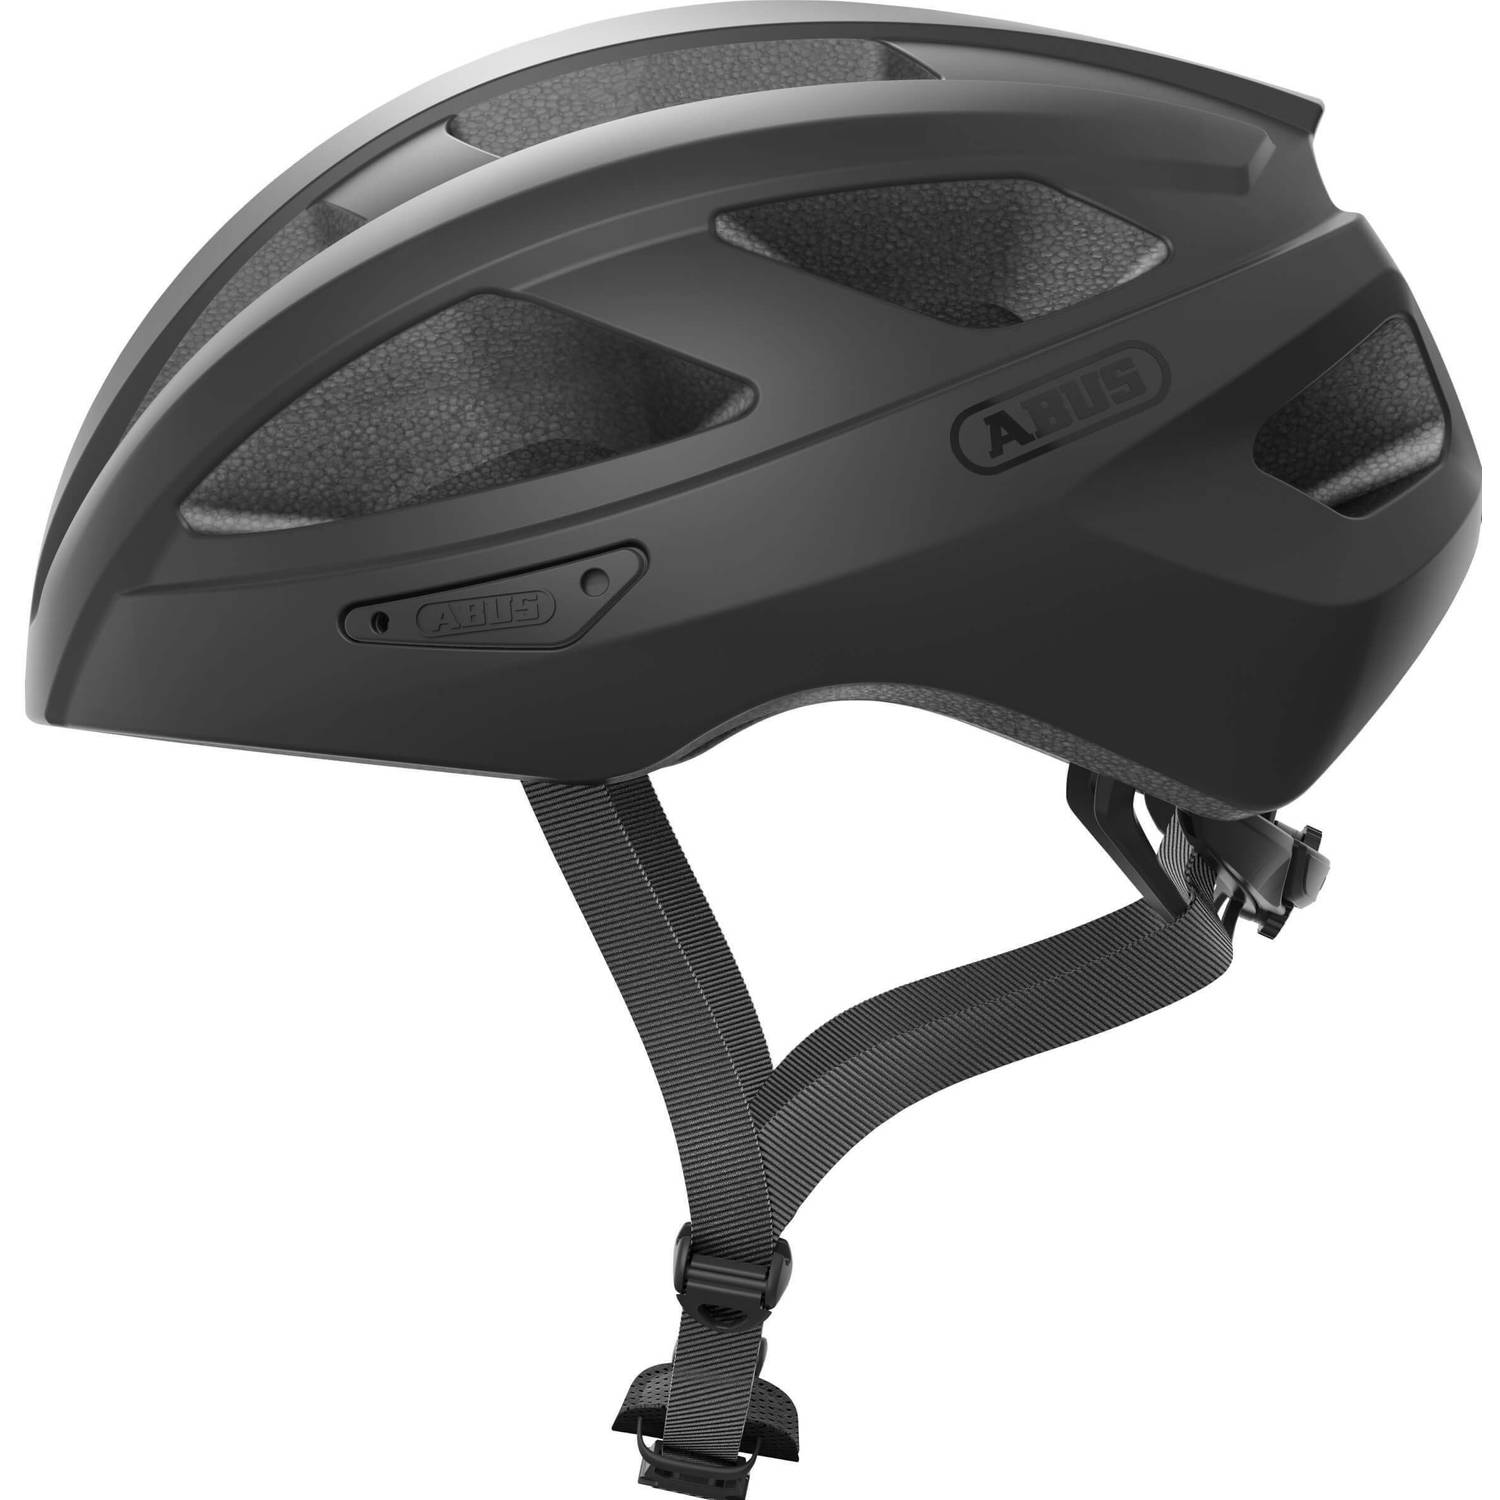 Abus Macator Road Cycling Helmet Helmen